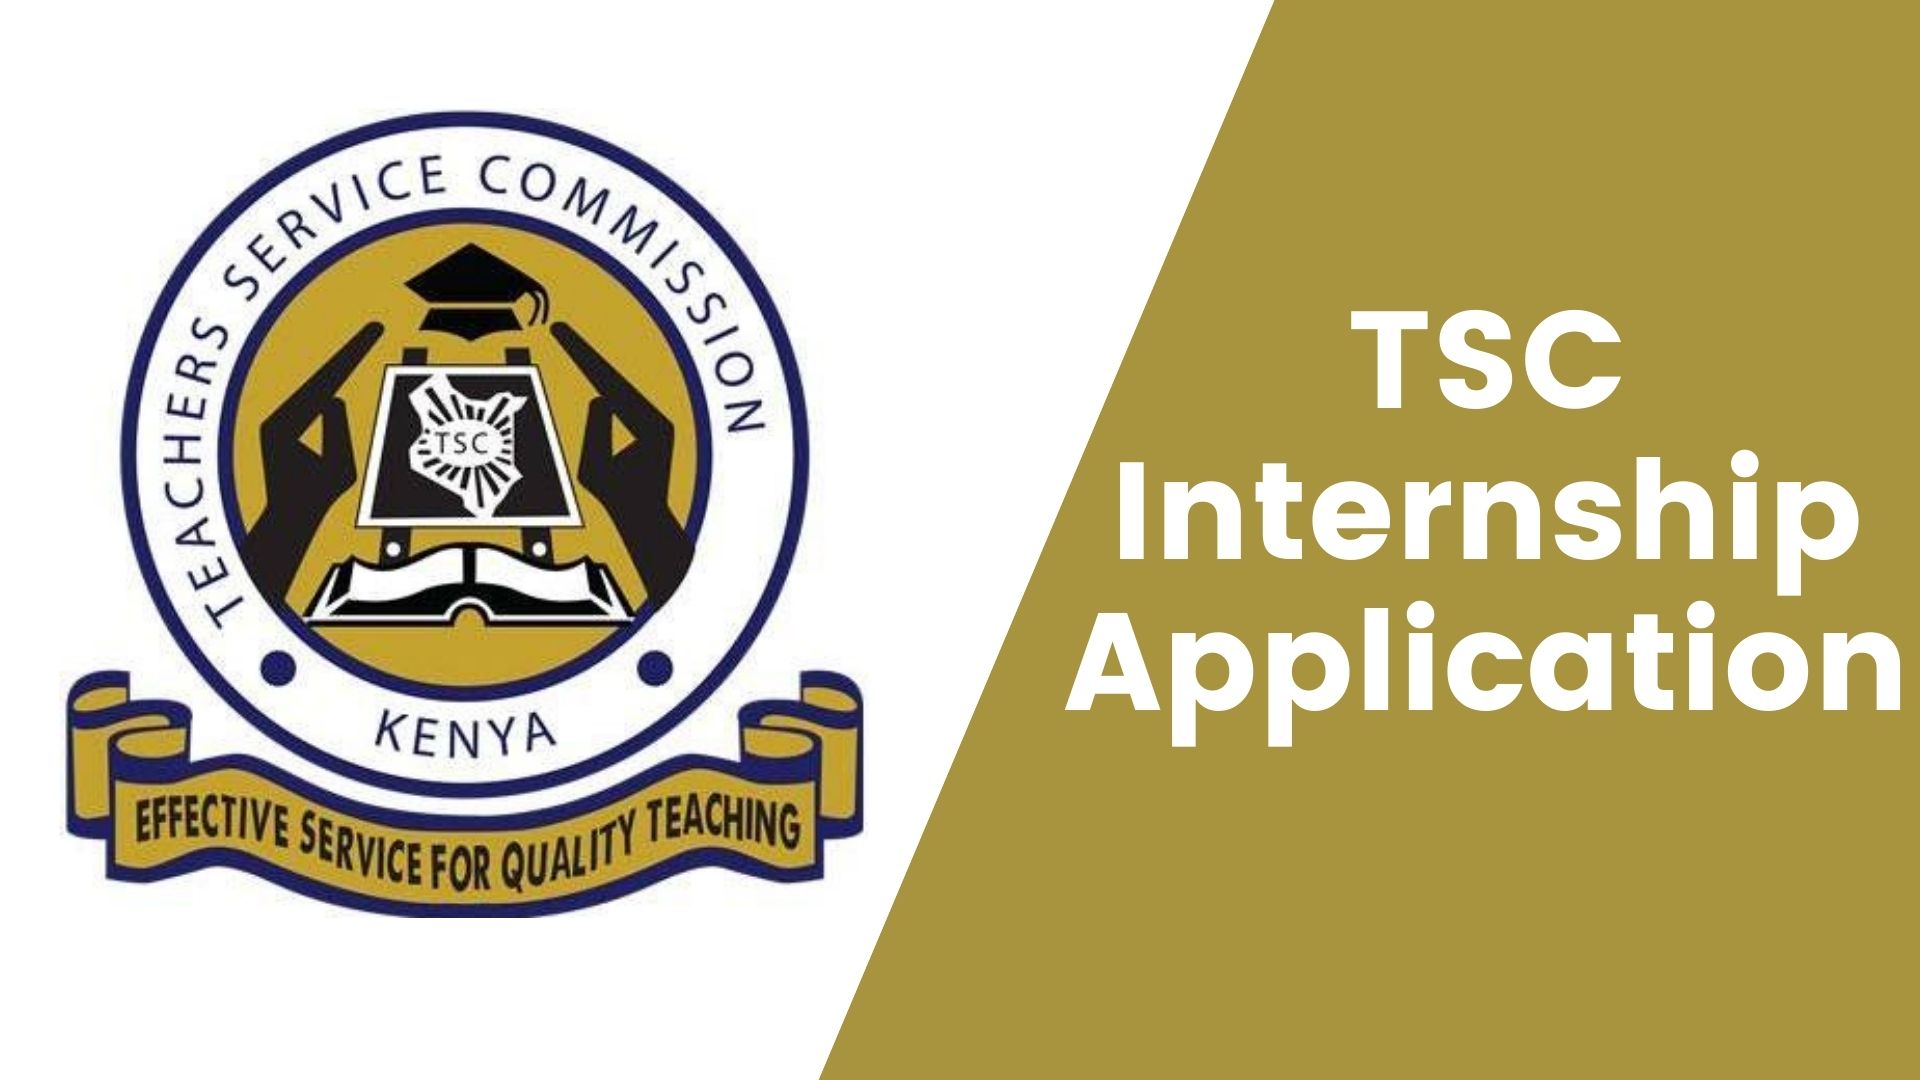 tsc internship application procedure and requirements